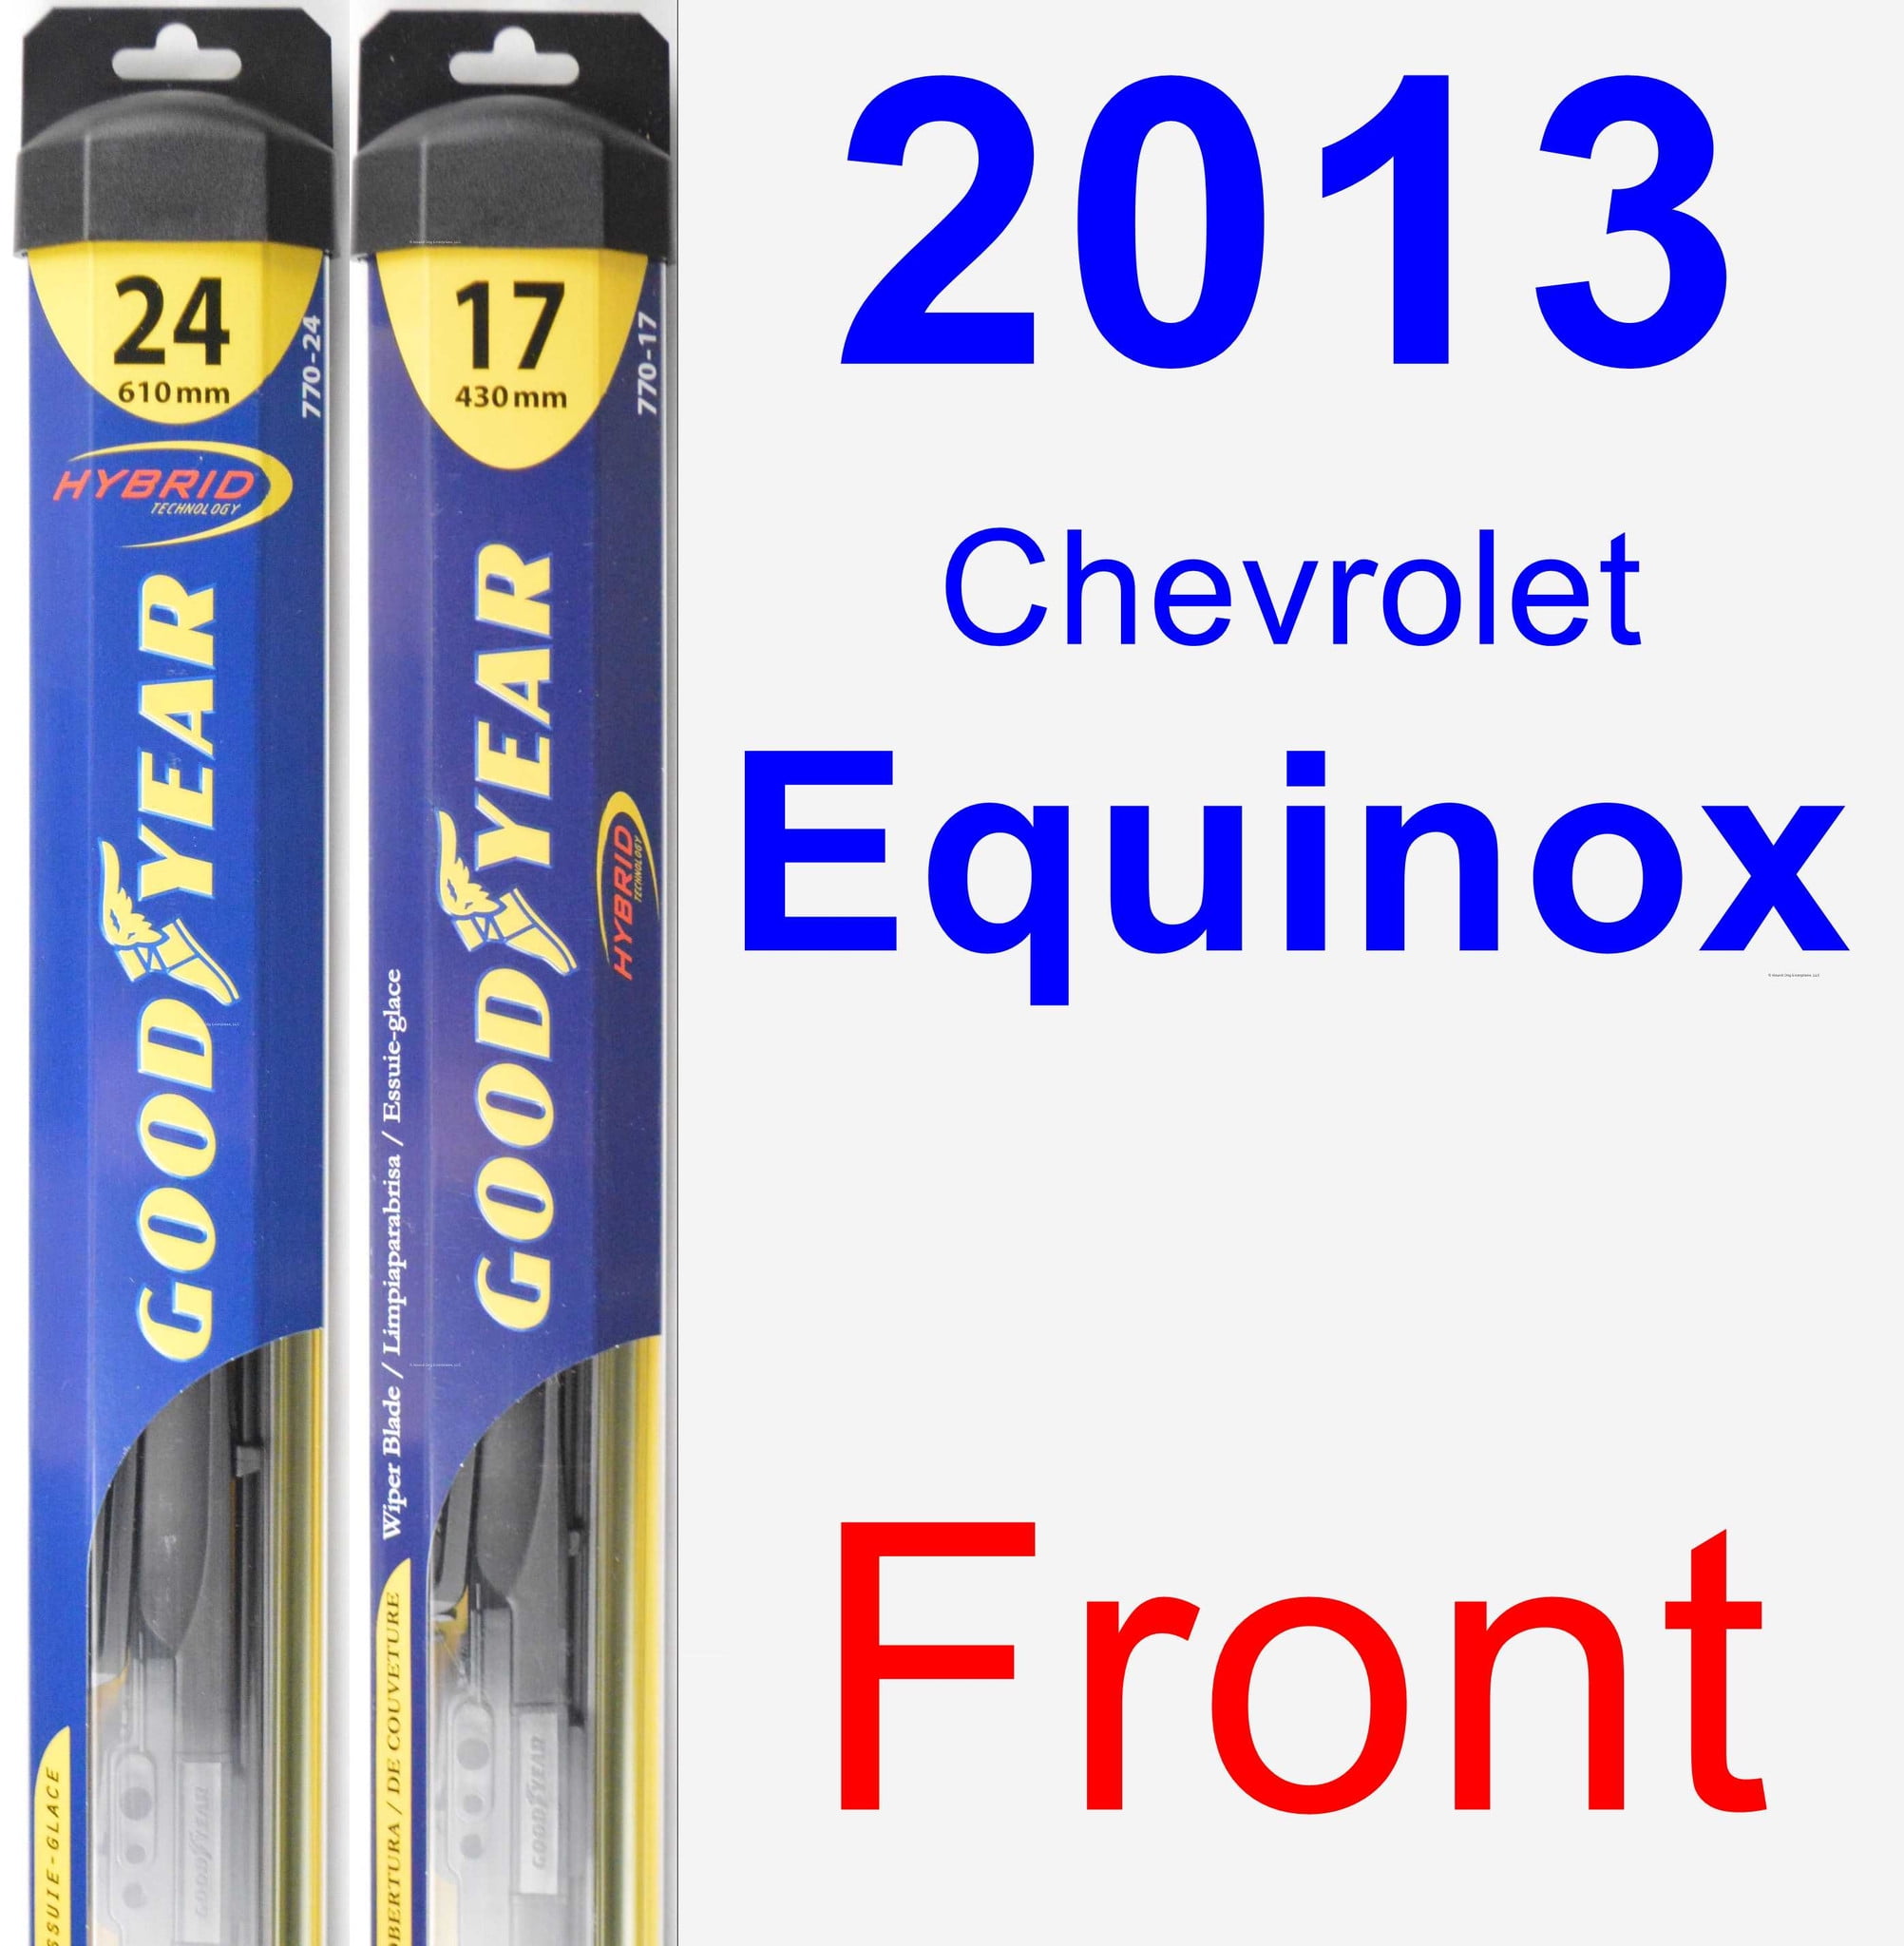 2013 Chevrolet Equinox Wiper Blade Set/Kit (Front) (2 Blades) - Hybrid - Walmart.com - Walmart.com What Size Wiper Blades For 2013 Chevy Equinox